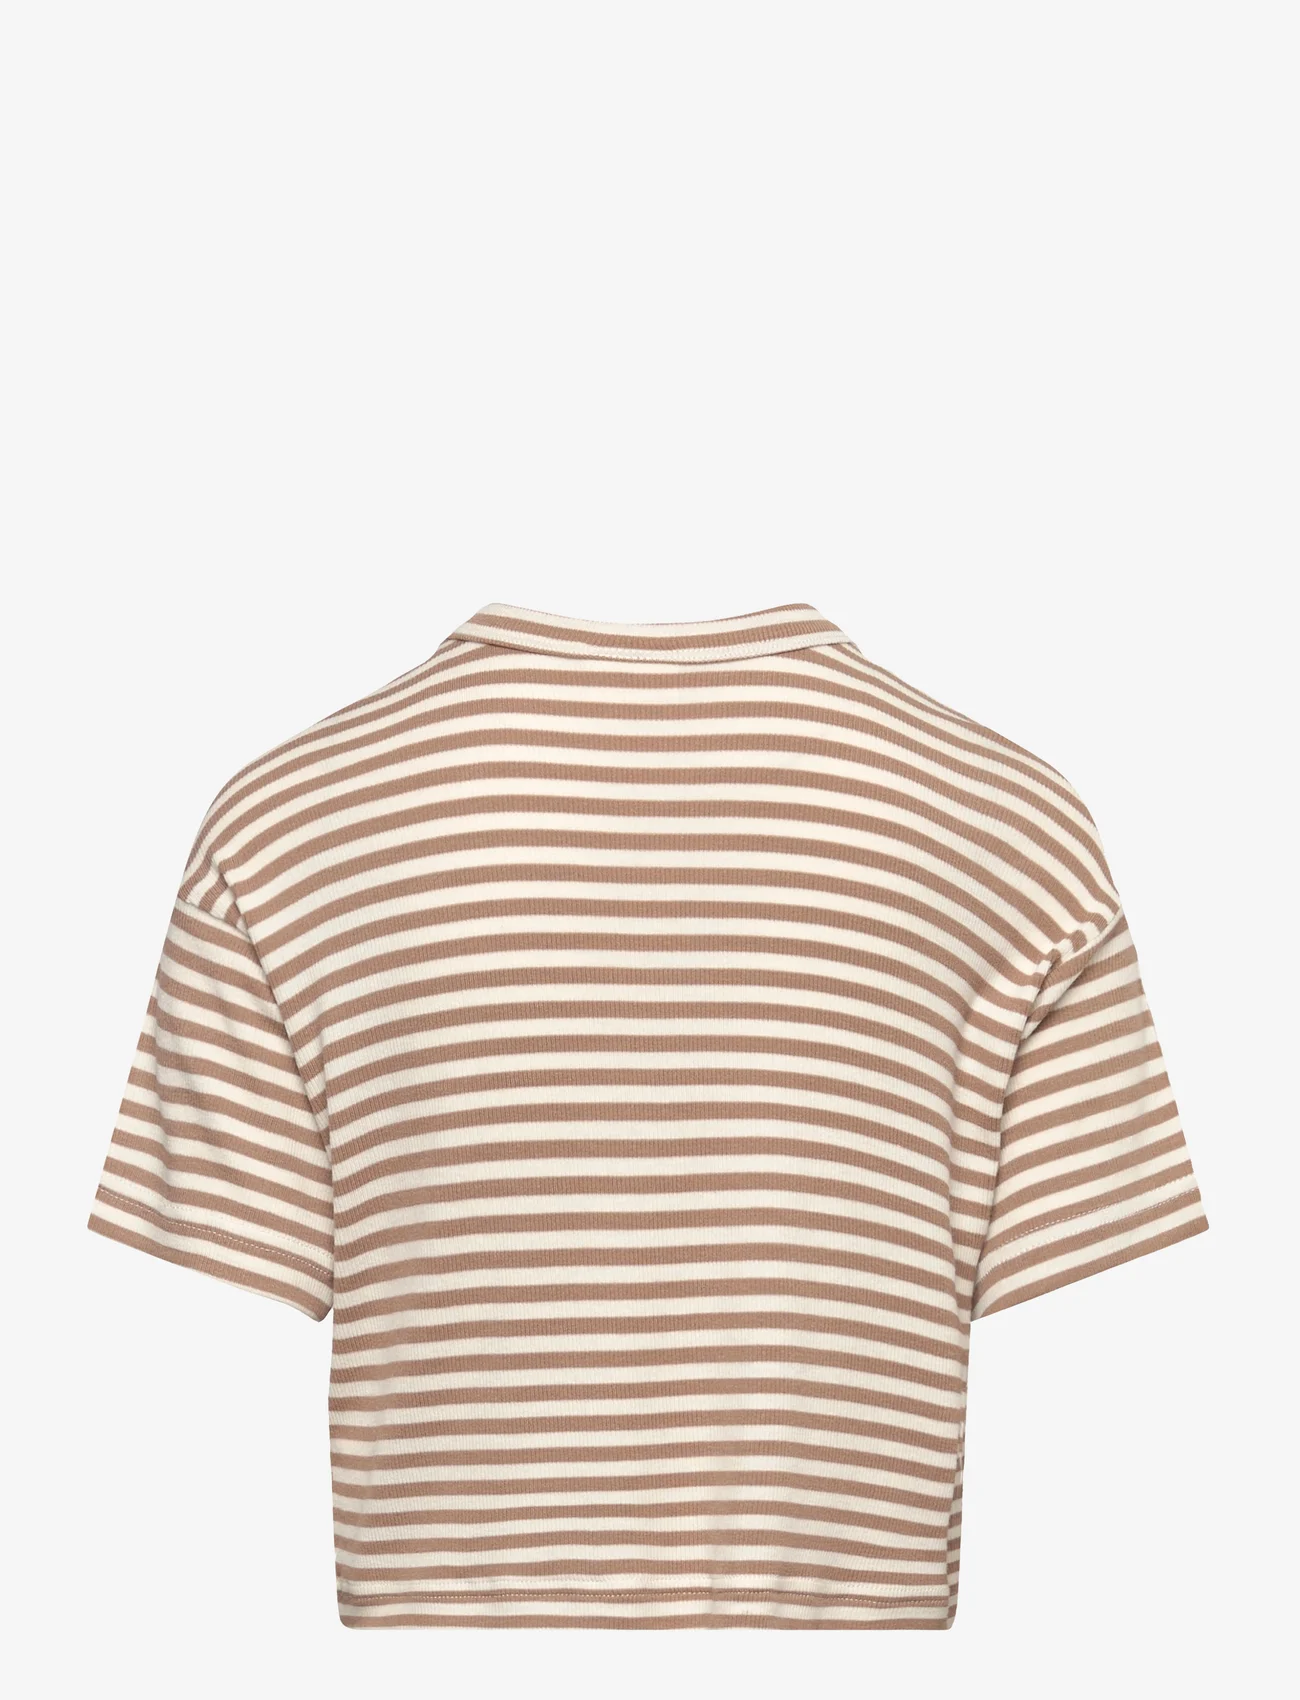 Sofie Schnoor Young - T-shirt - kortærmede t-shirts - beige striped - 1